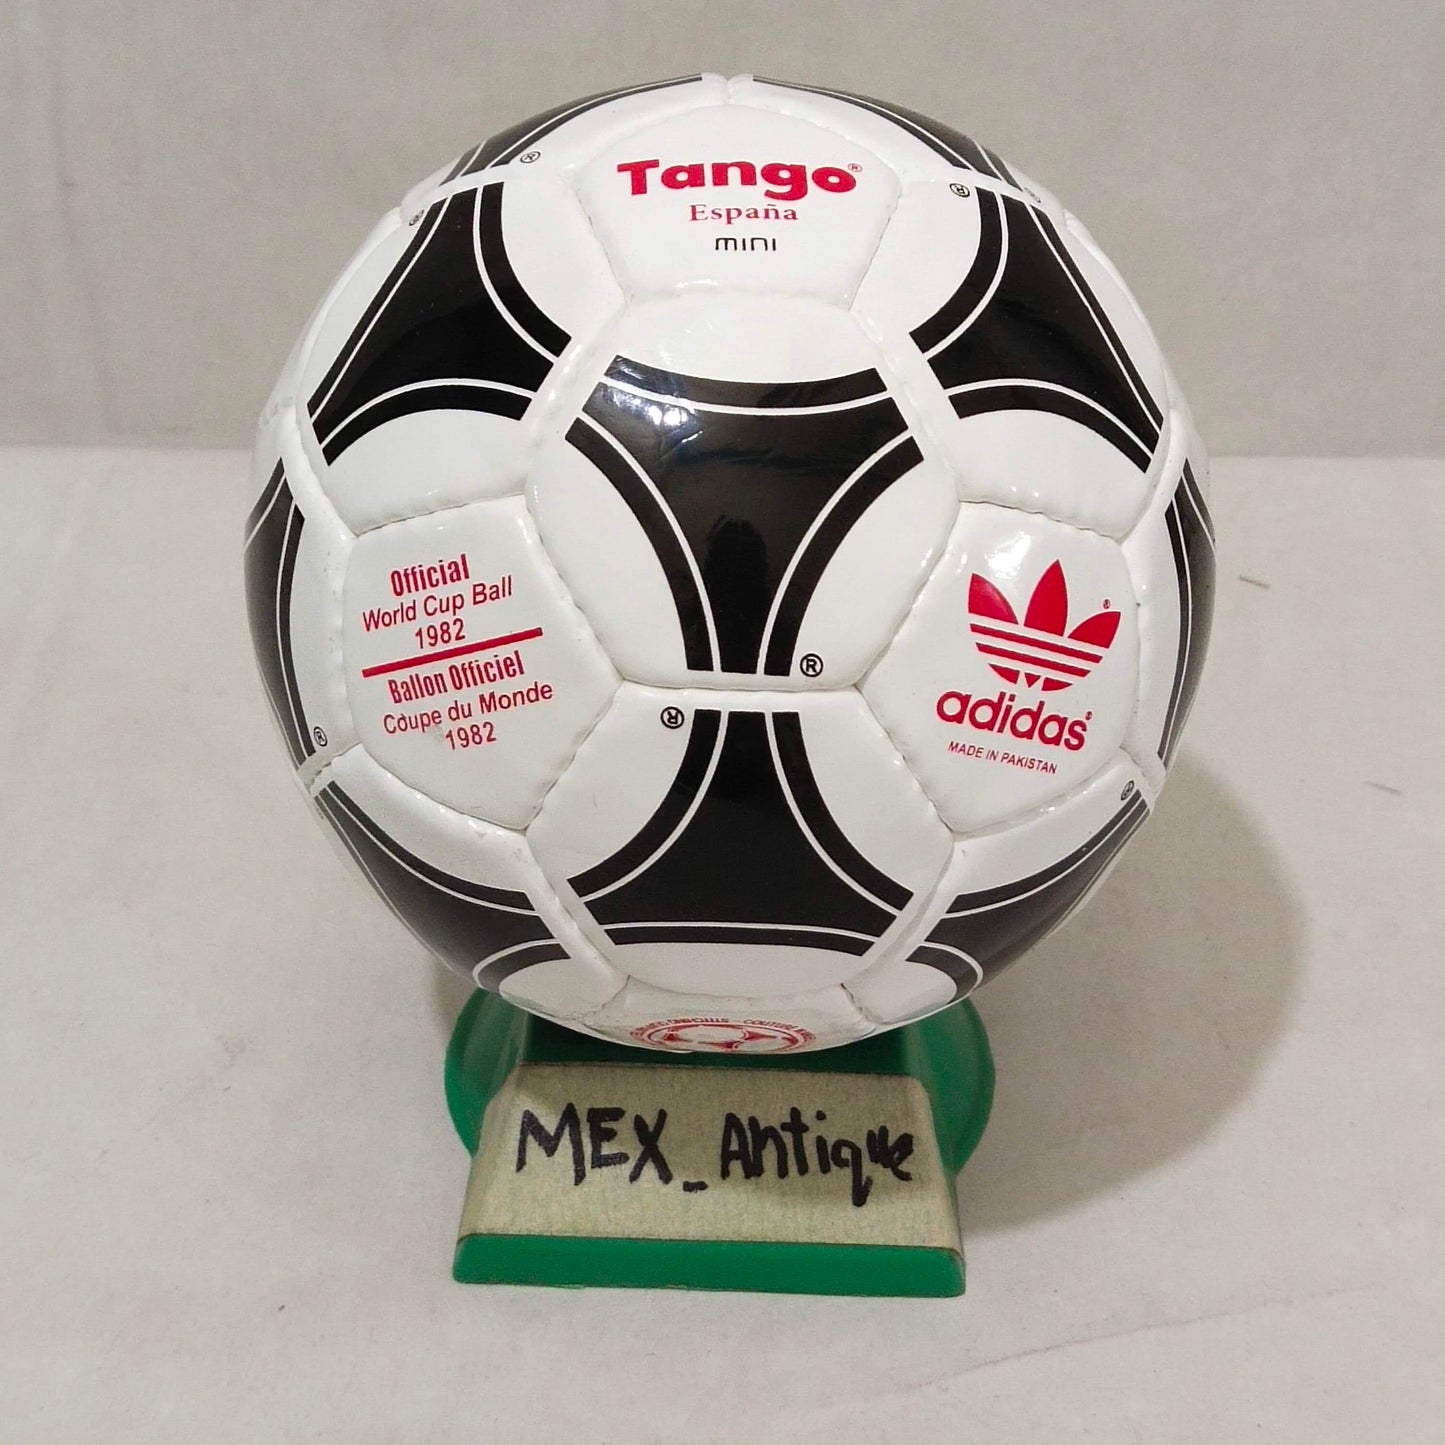 Adidas Tango Espana mini | FIFA World Cup 1982 | Mini Ball l Red Stamps 03